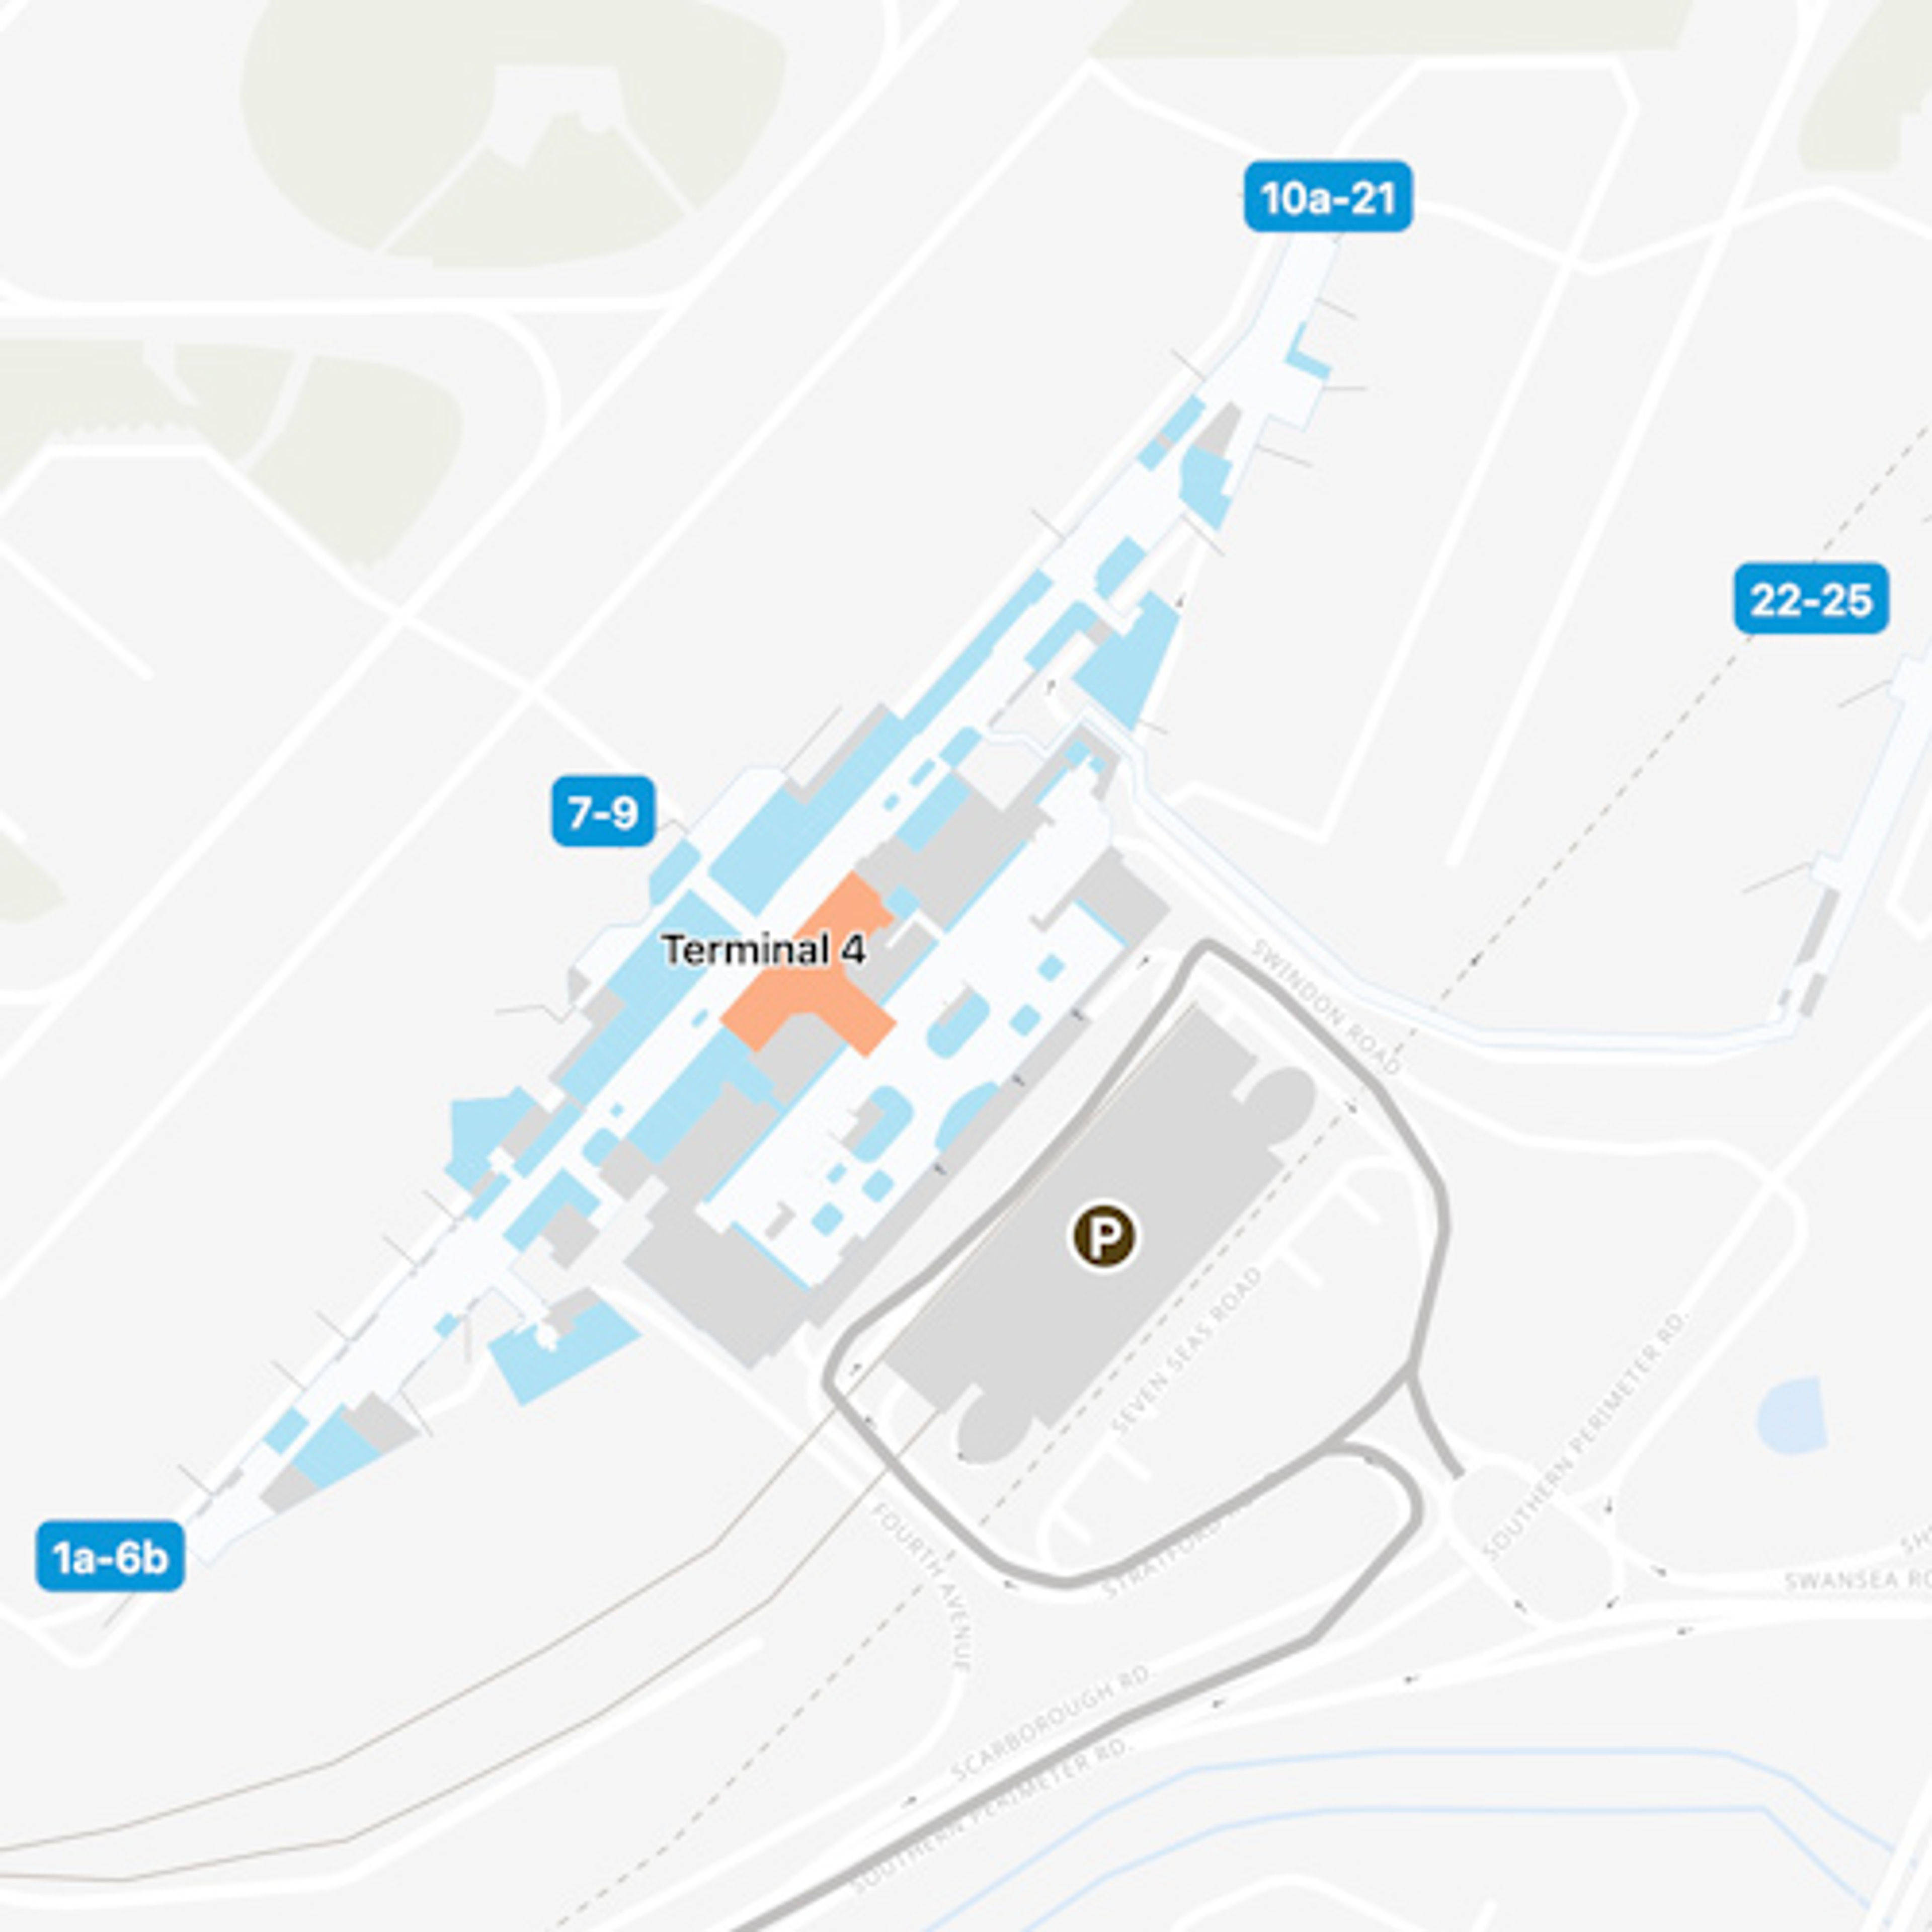 London Heathrow Airport LHR Terminal 4 Map